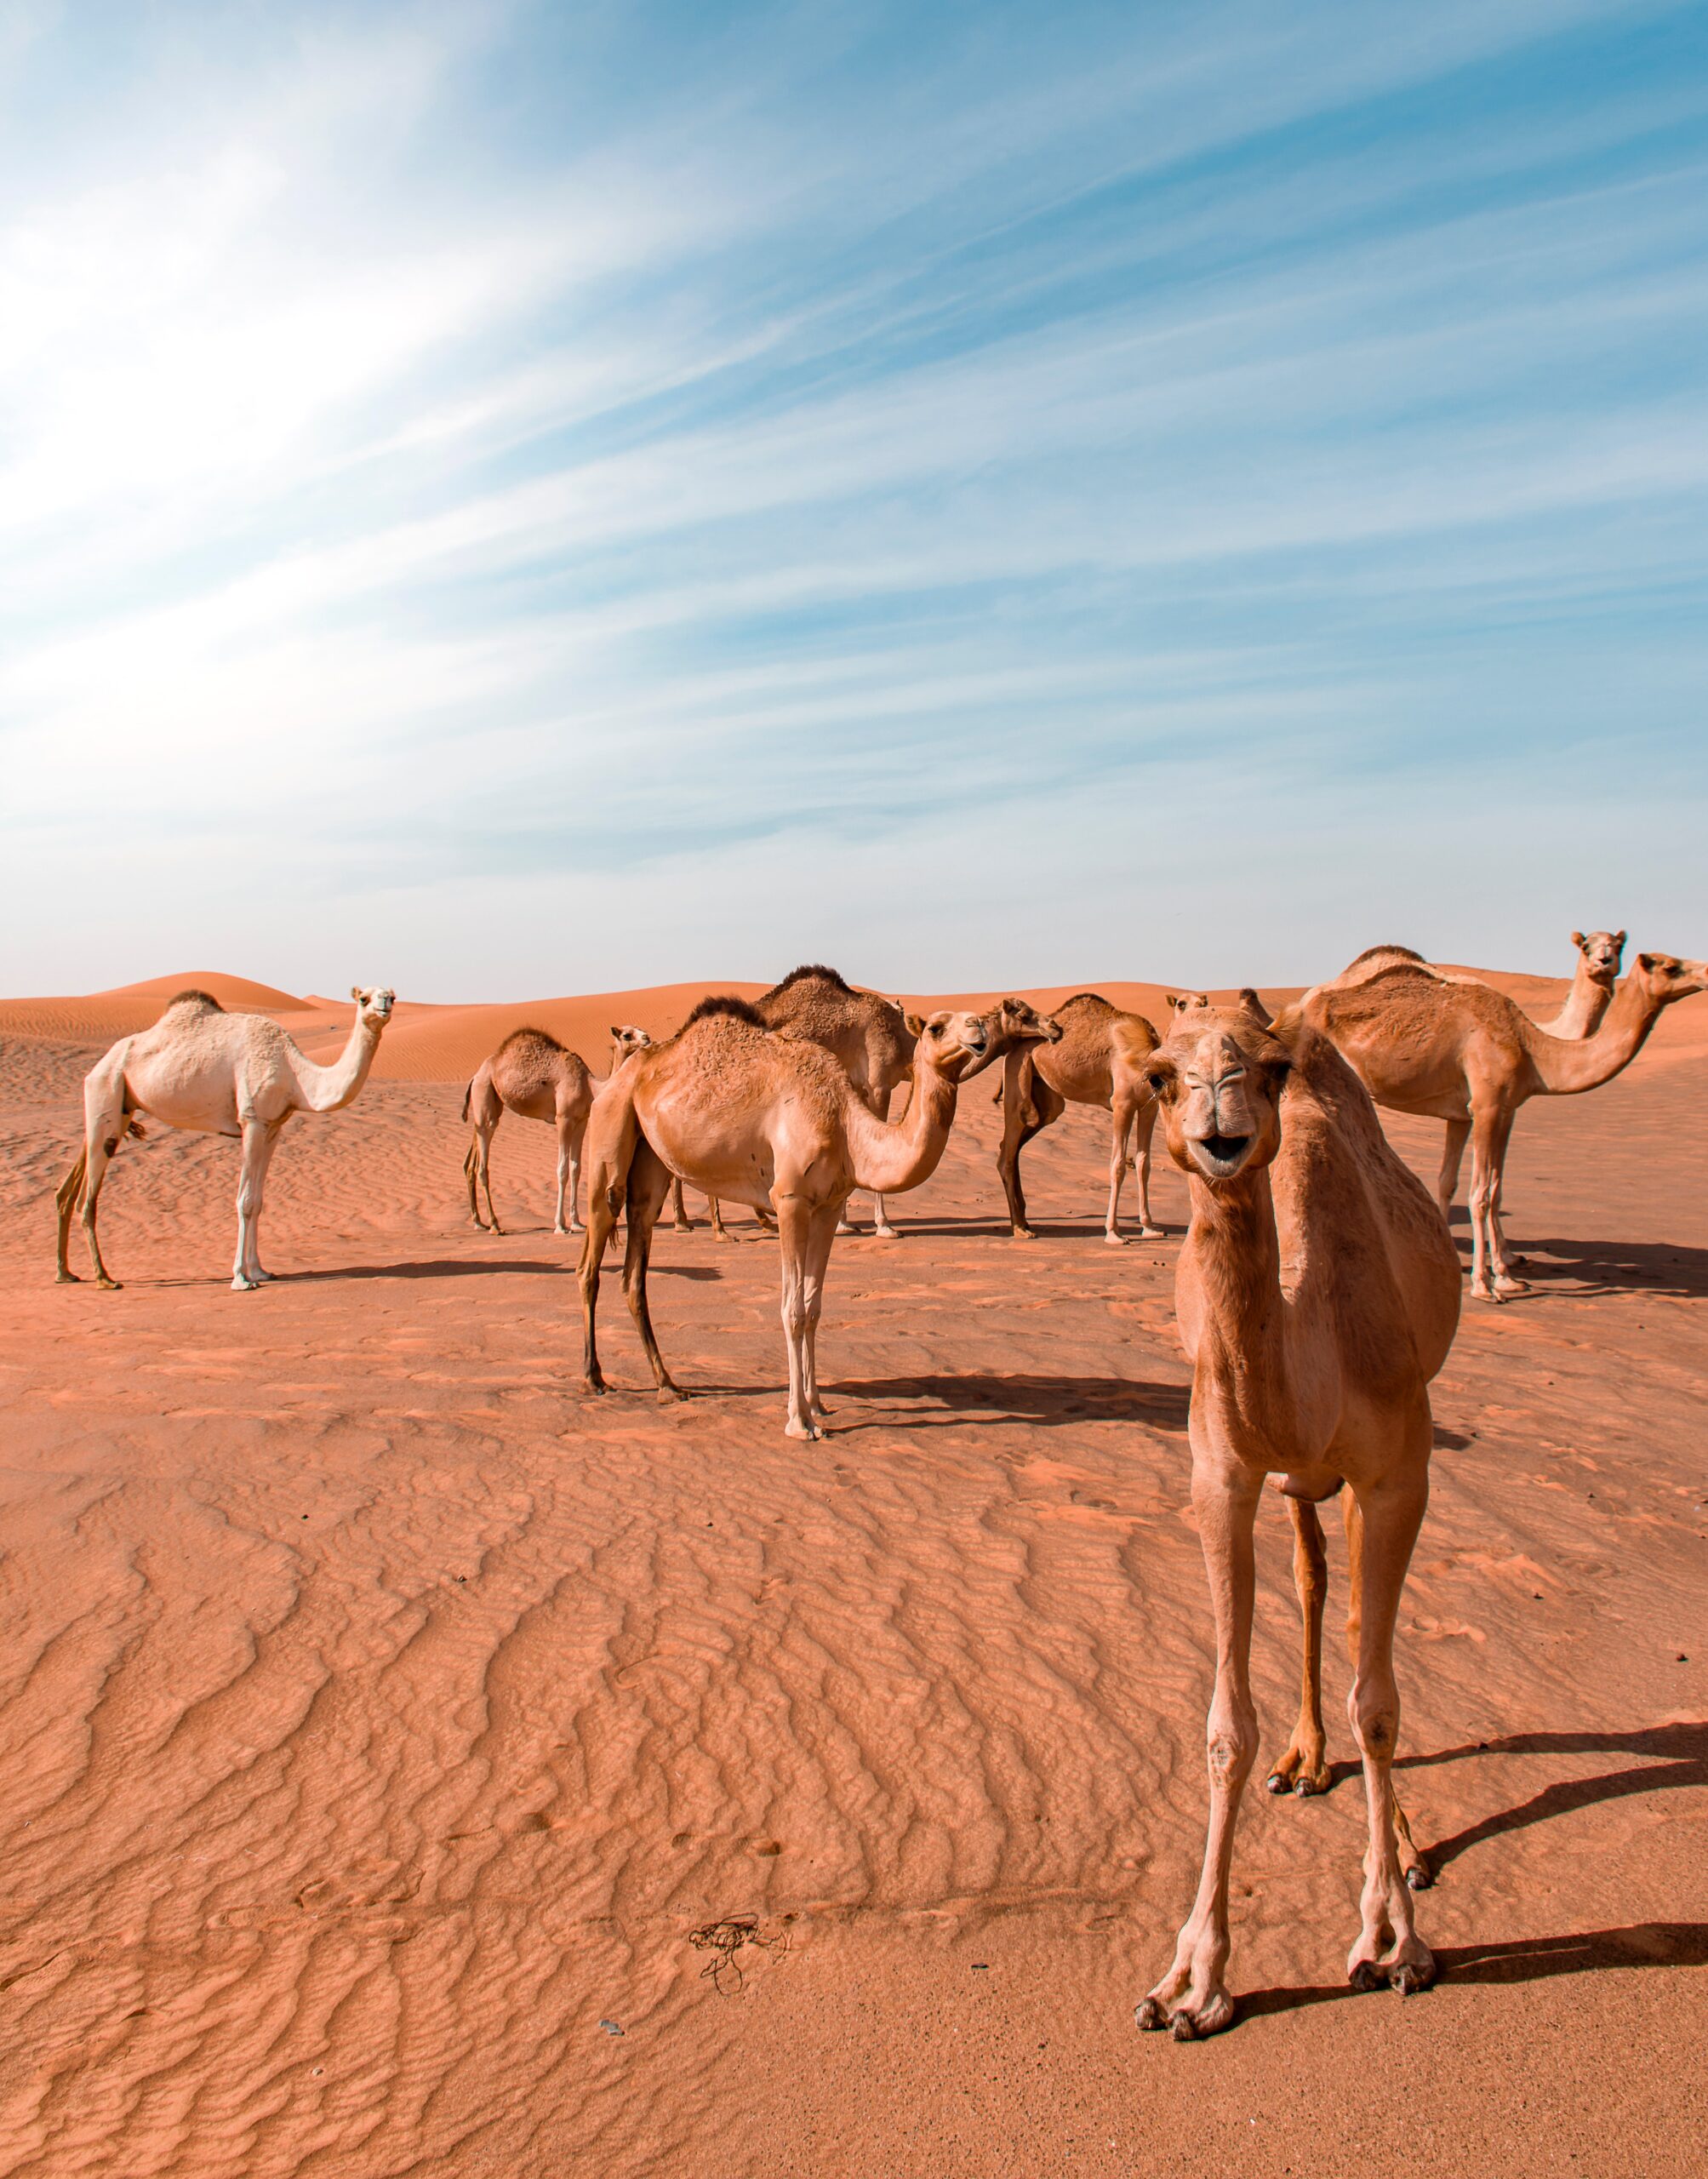 Dubai sivatagi szafari tevékkel